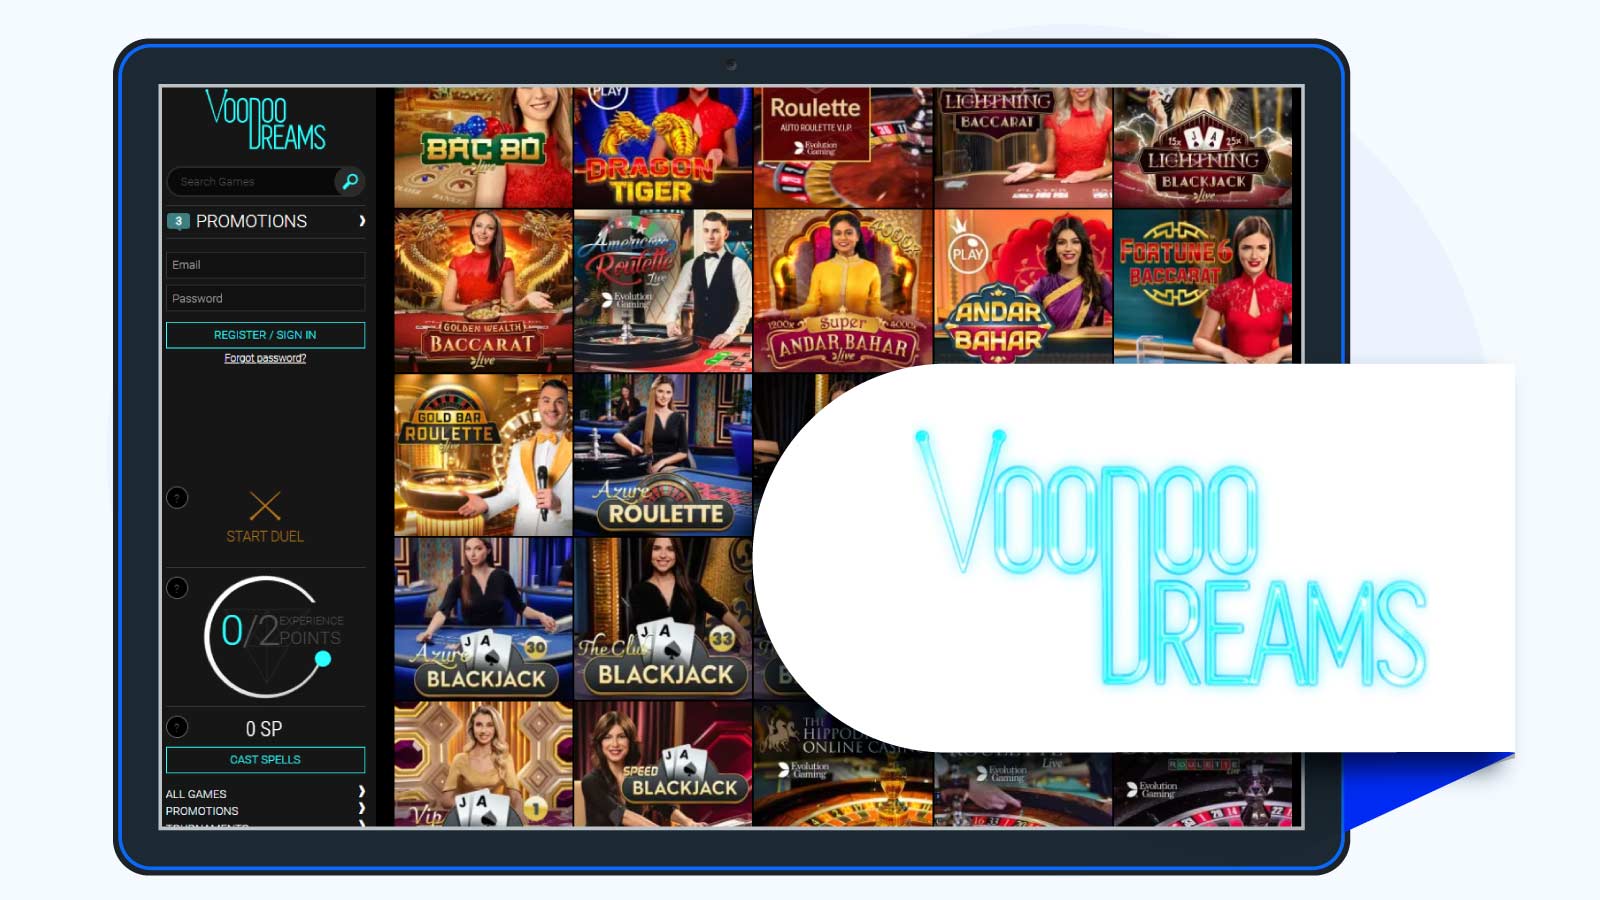 VoodooDreams Casino Best Blackjack Casino for High Rollers